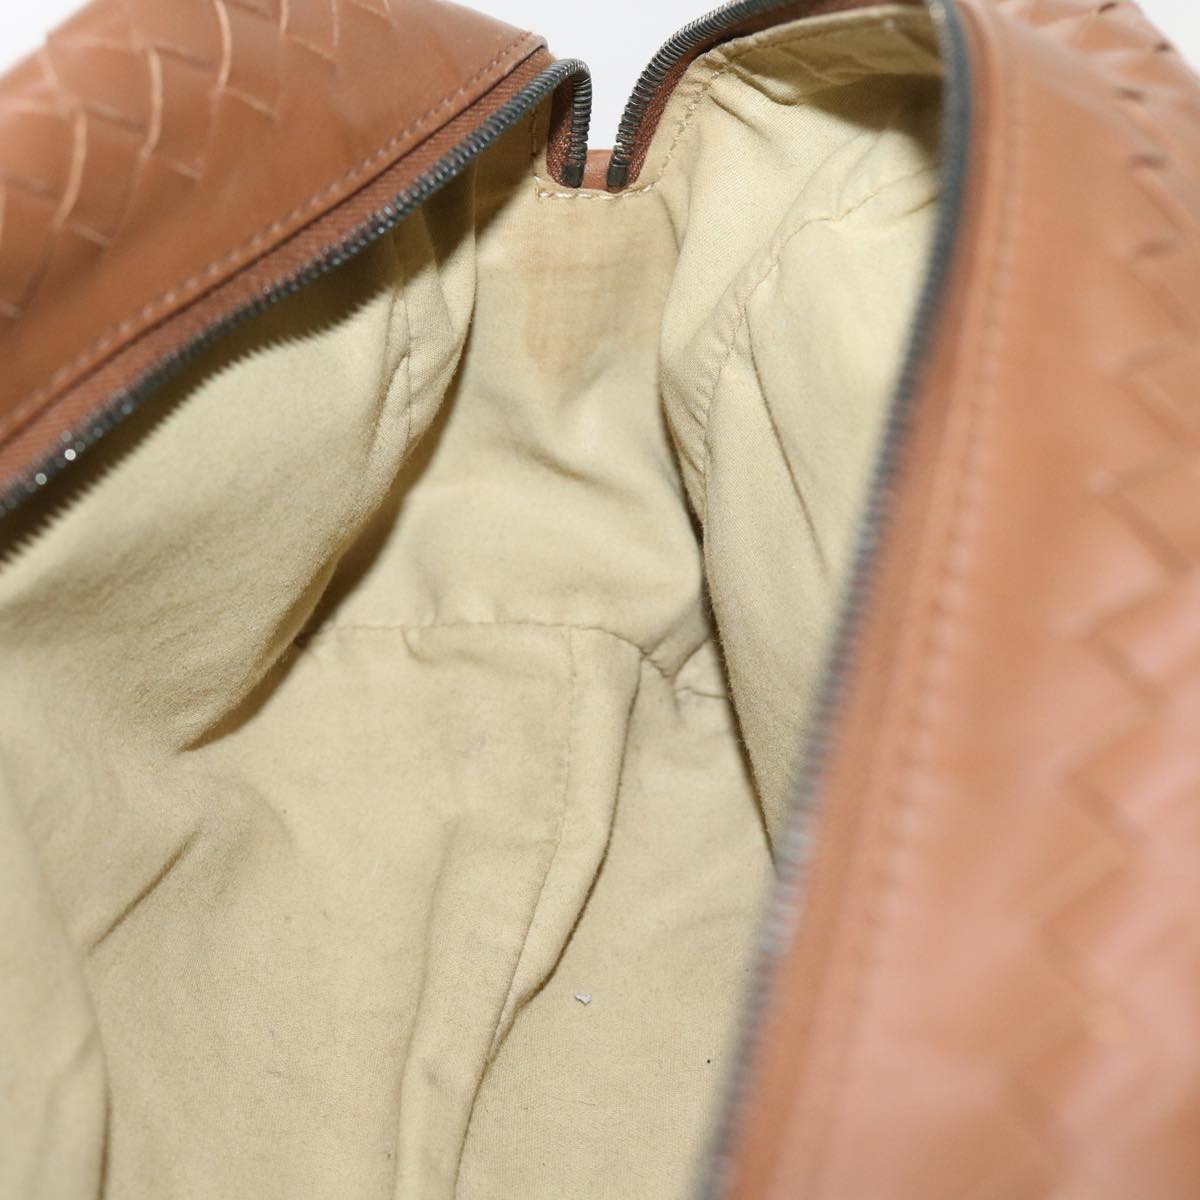 BOTTEGAVENETA INTRECCIATO Clutch Bag Leather Brown Auth 57828